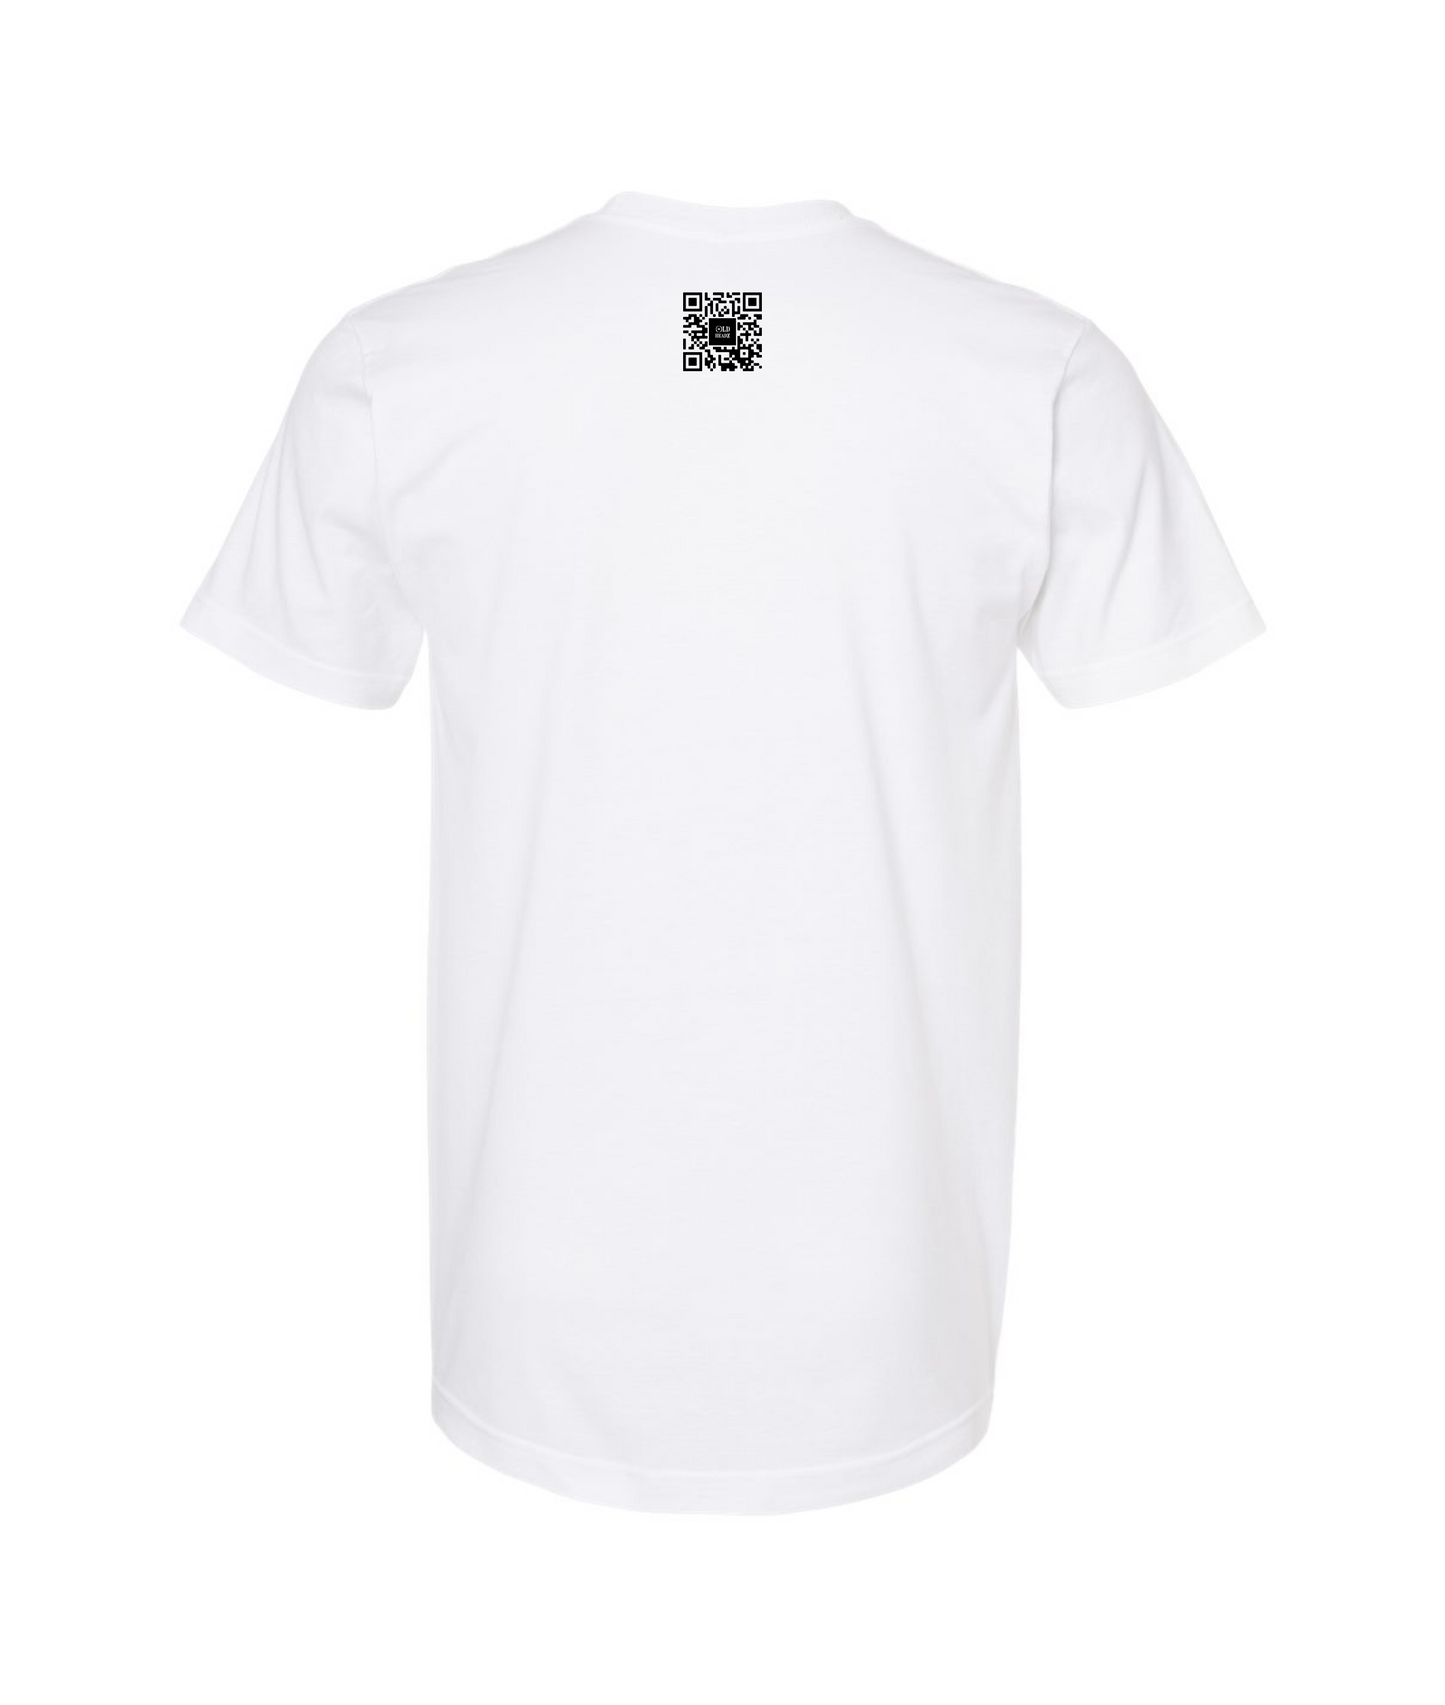 The Old Headz - DESIGN 2 - White T Shirt